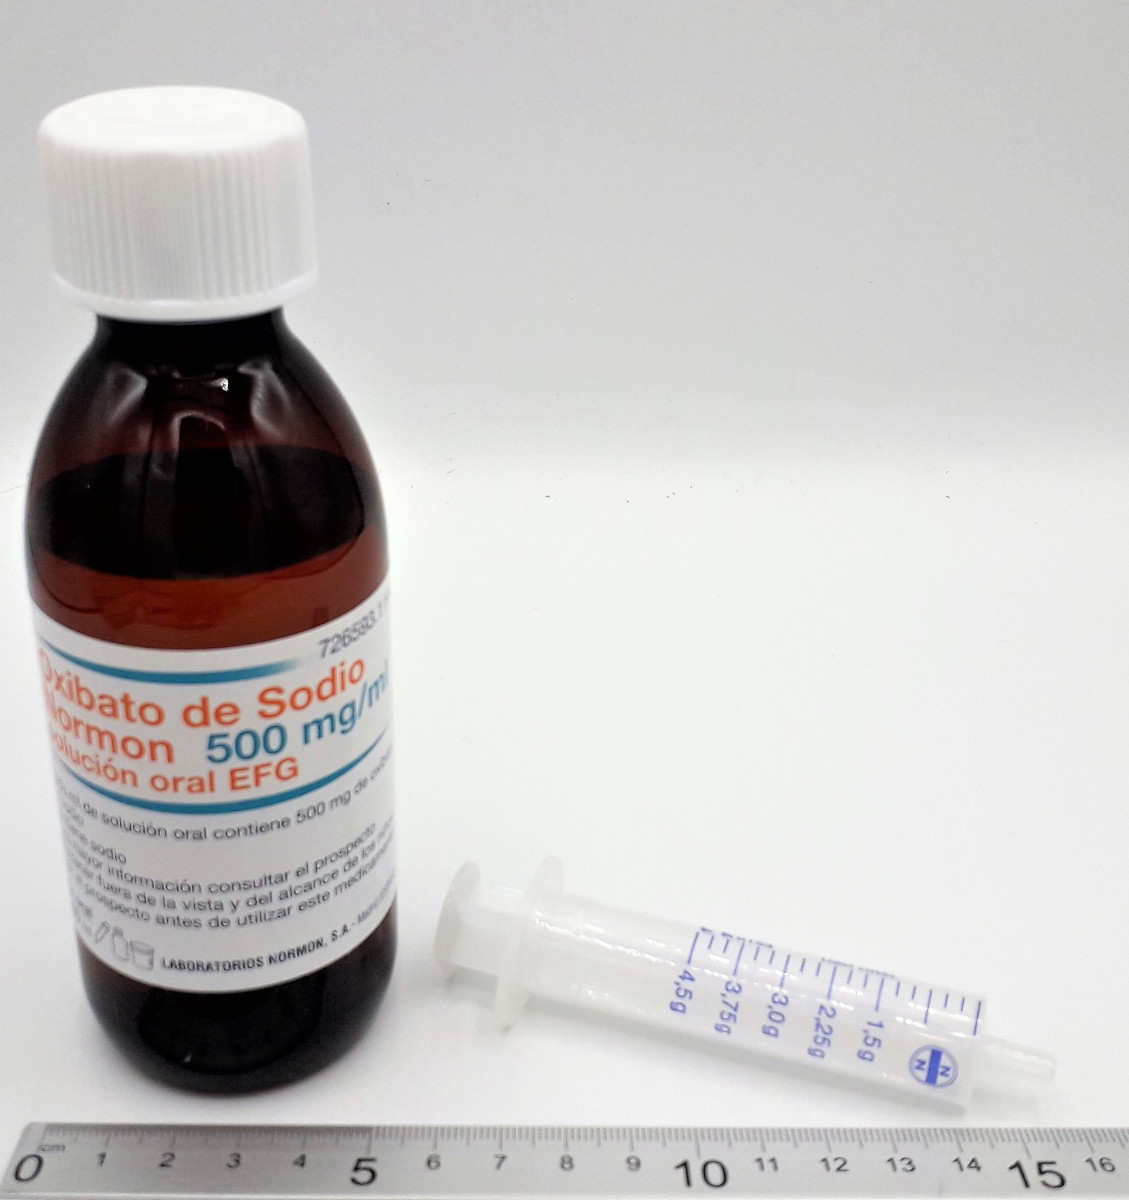 OXIBATO DE SODIO NORMON 500 MG/ML SOLUCION ORAL EFG, 1 frasco de 180 ml fotografía de la forma farmacéutica.